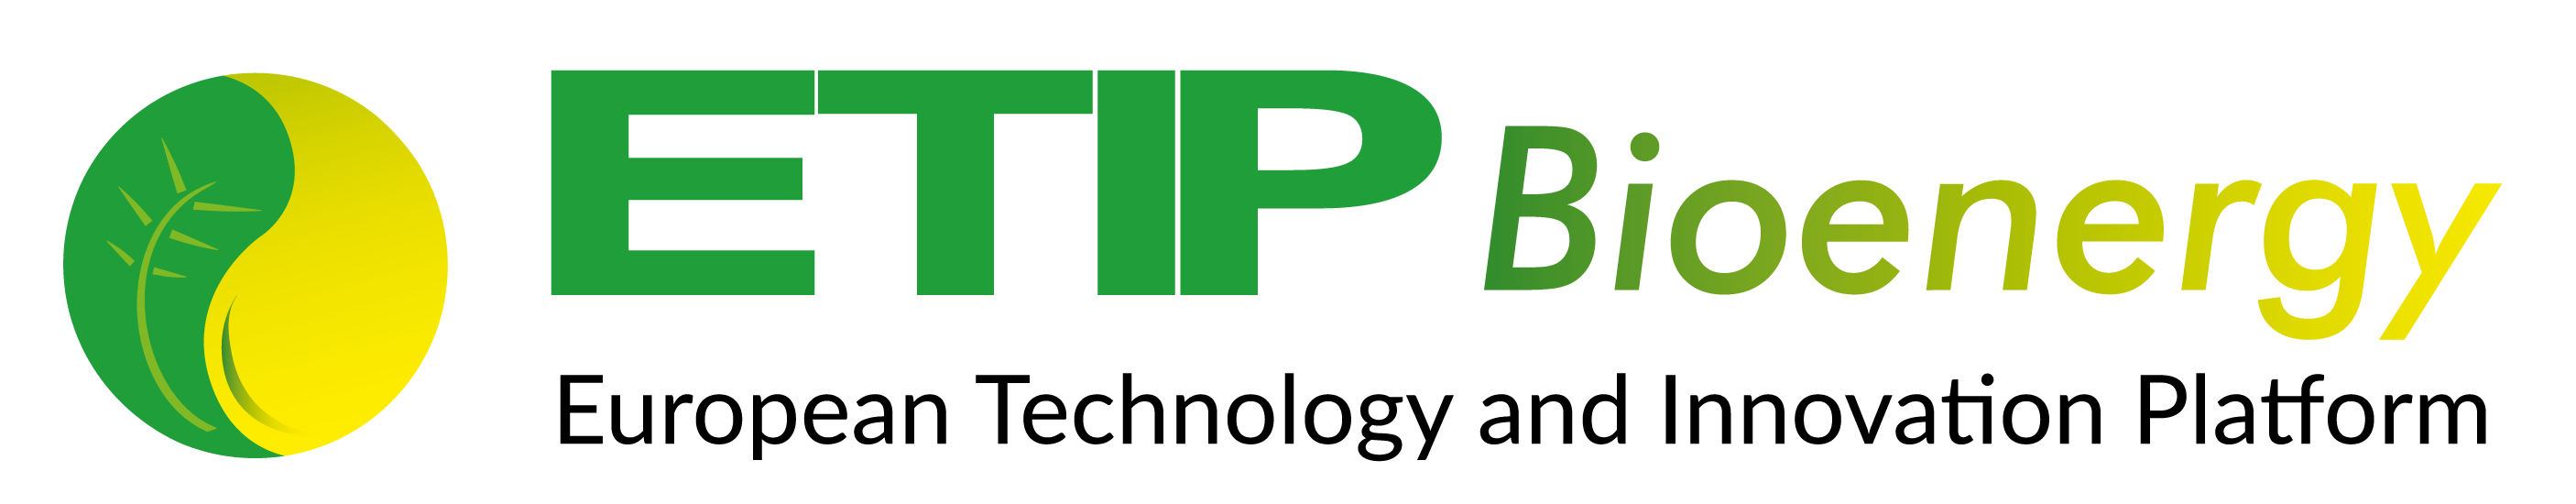 ETIP-Bioenergy